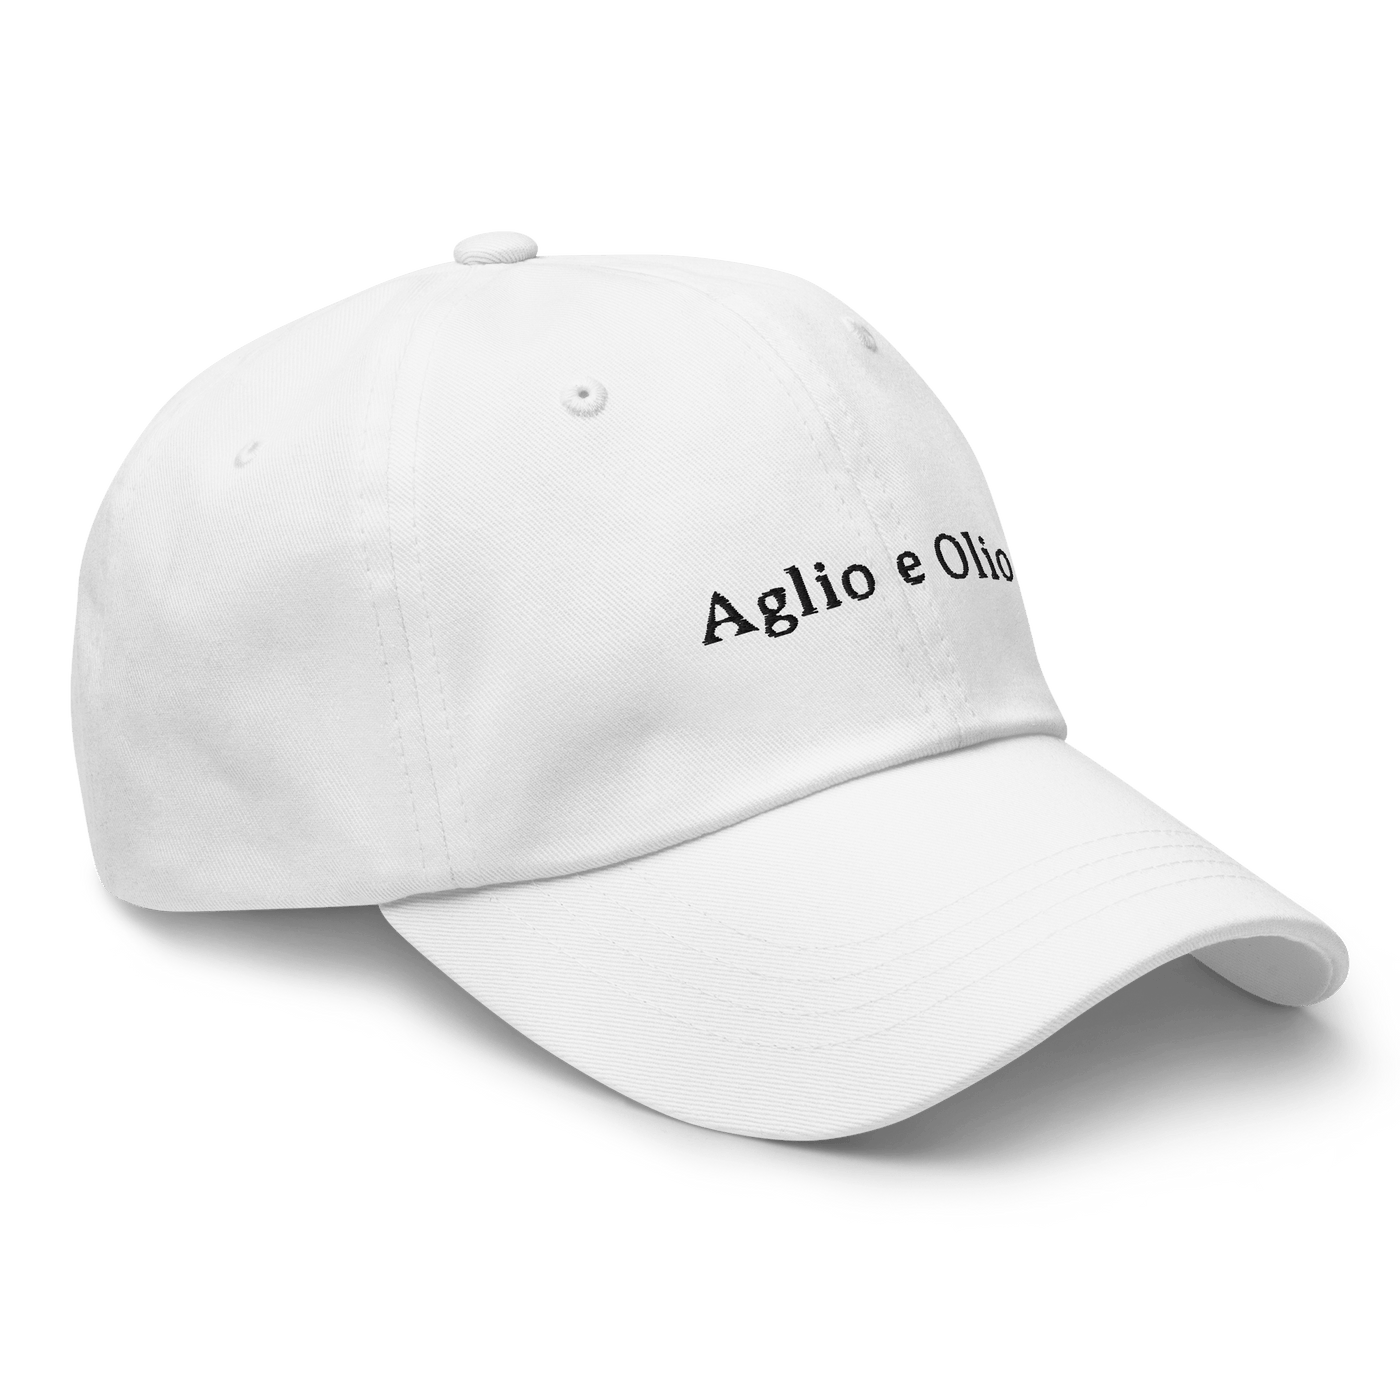 Aglio e Olio Dad hat - White - - Just Another Cap Store